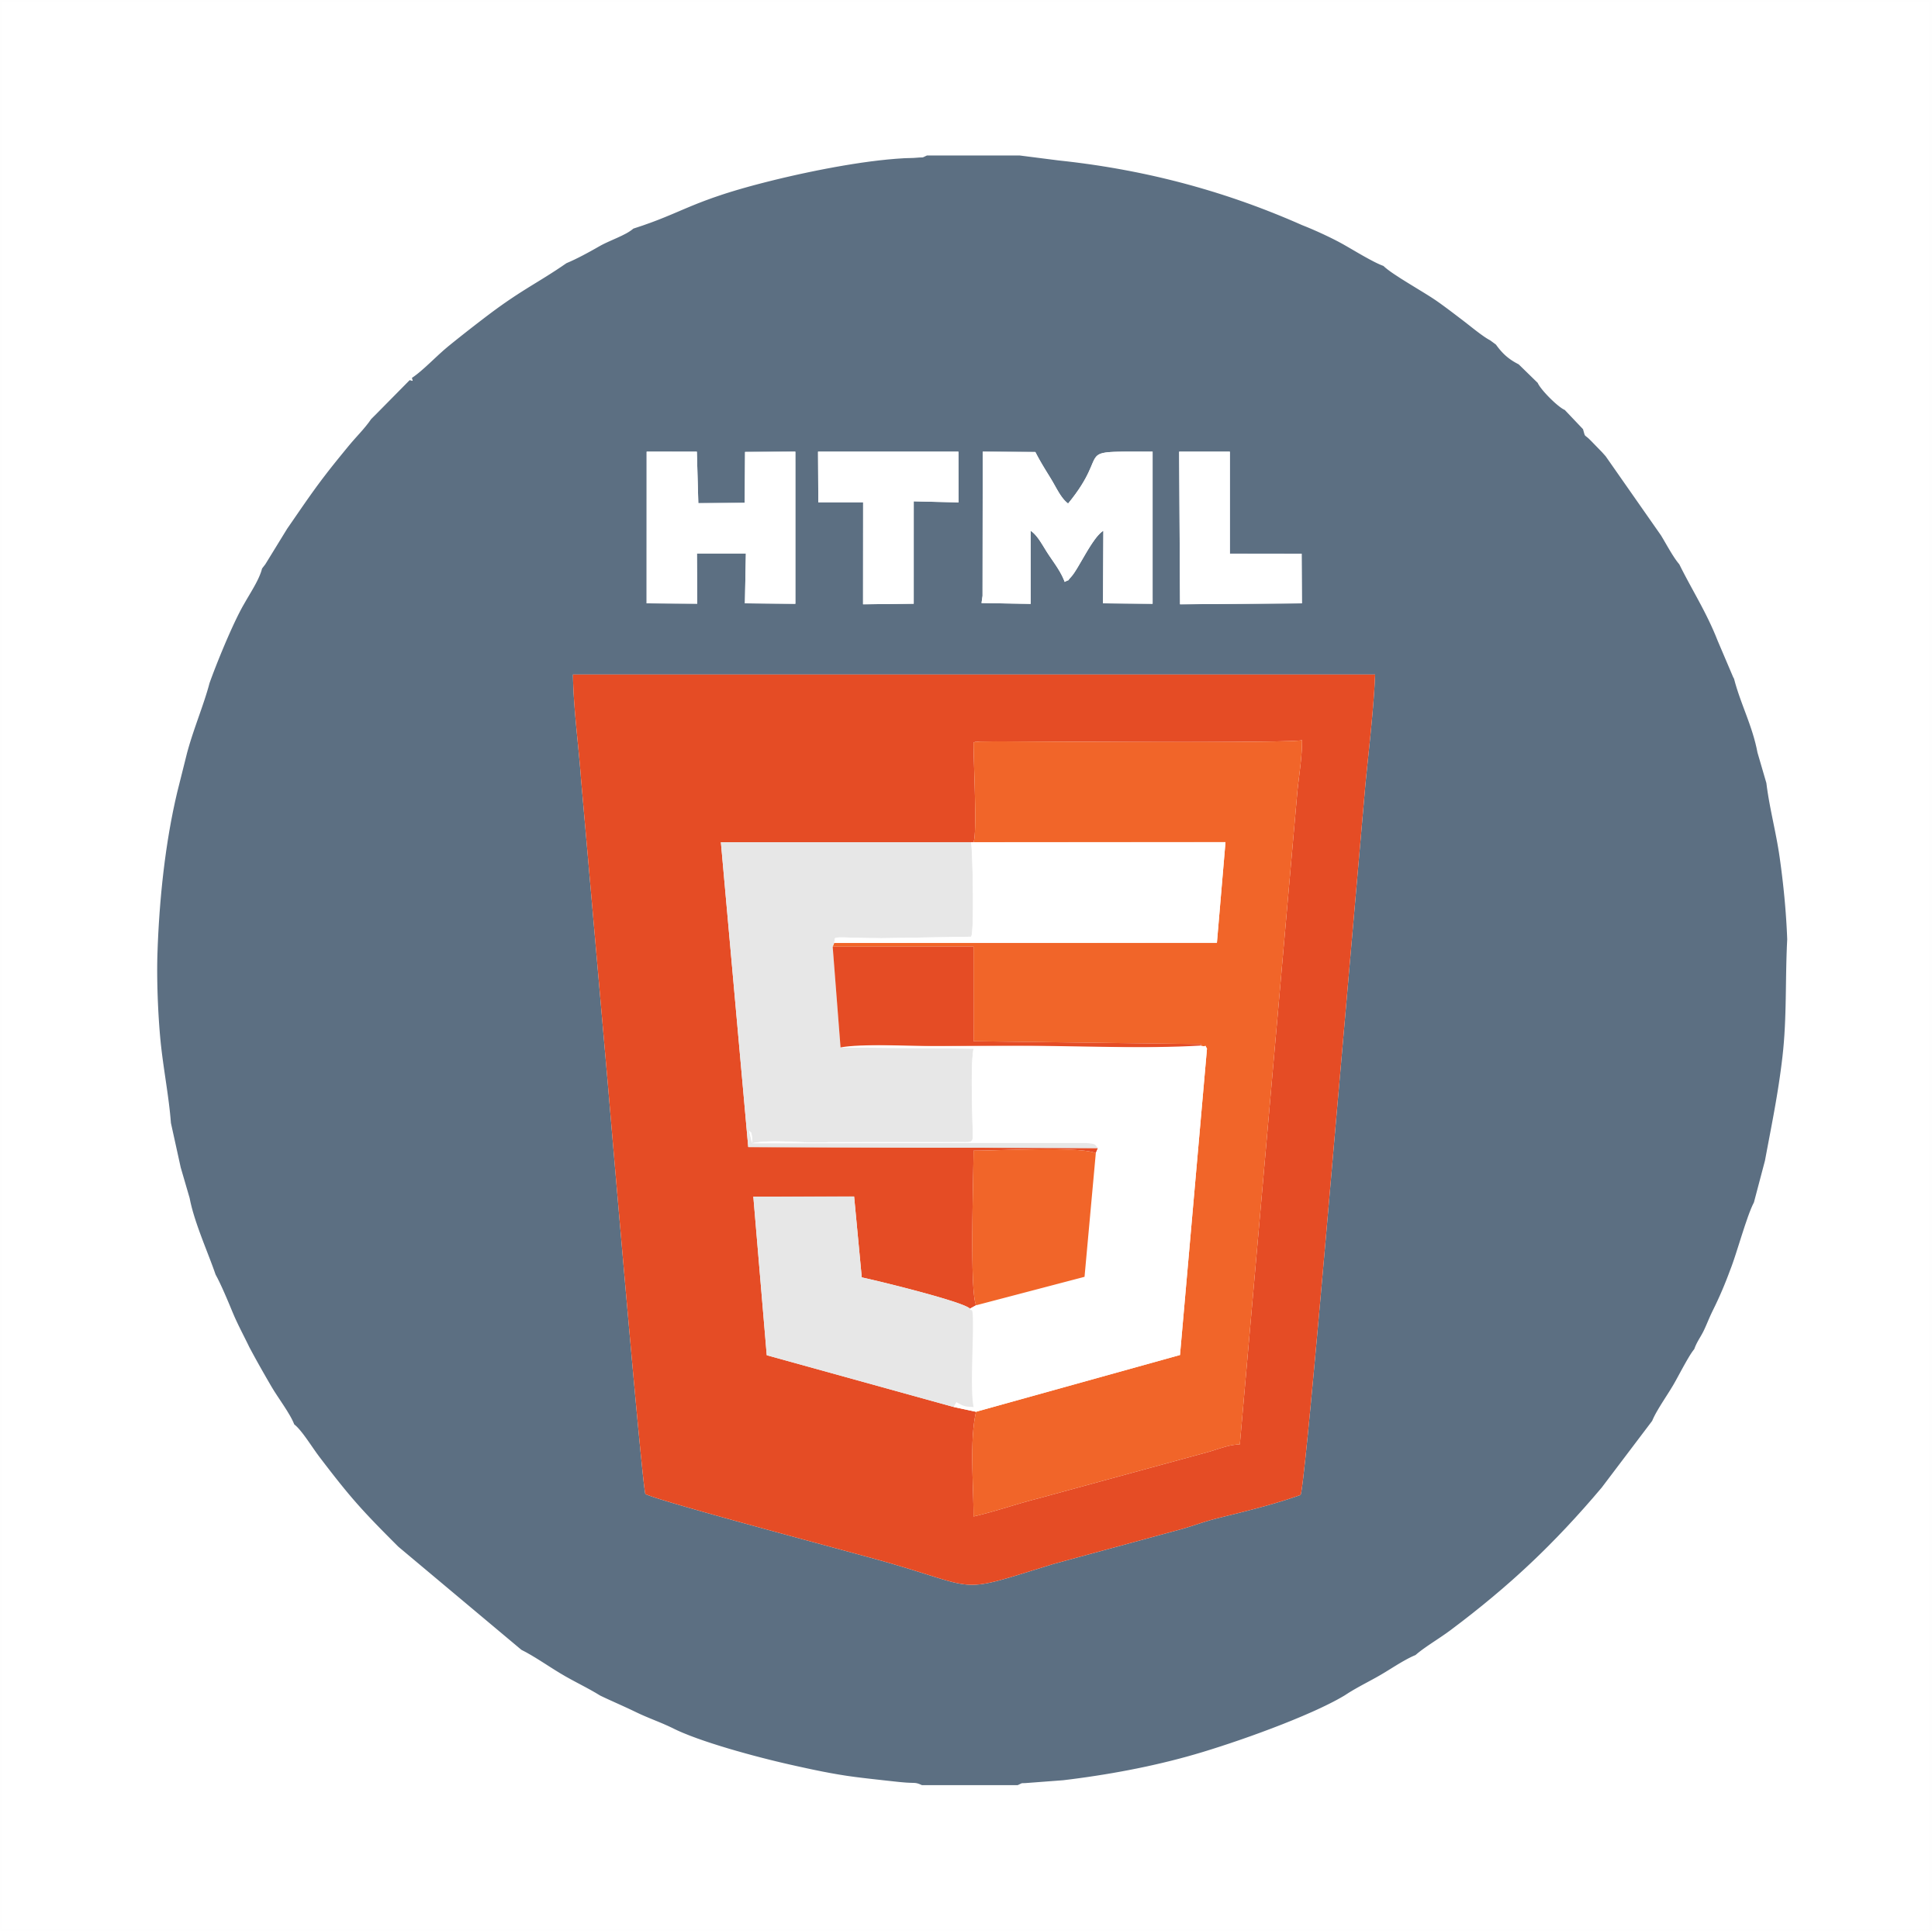 Internal html. Значок html. Html логотип. Иконка html5. Html без фона.